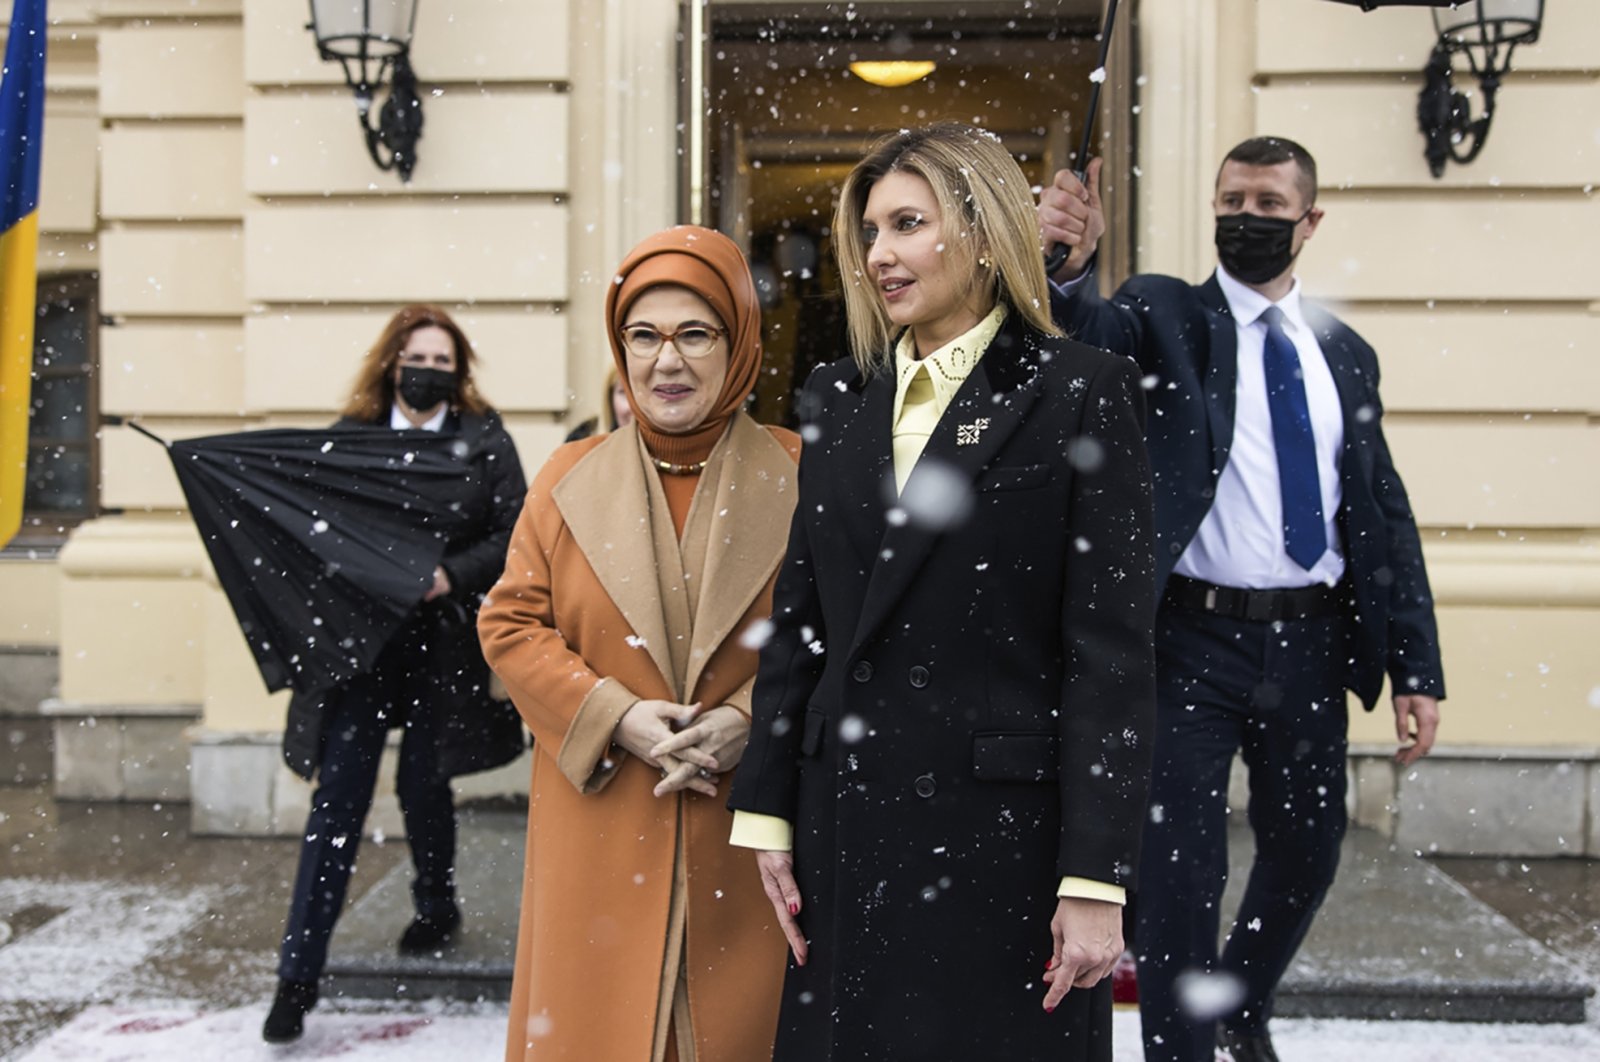 Türkiye&#039;s first lady Emine Erdoğan (L) and Ukrainian first lady Olena Zelenska walk after a welcome ceremony in Kyiv, Ukraine, Feb. 3, 2022. (AP Photo)